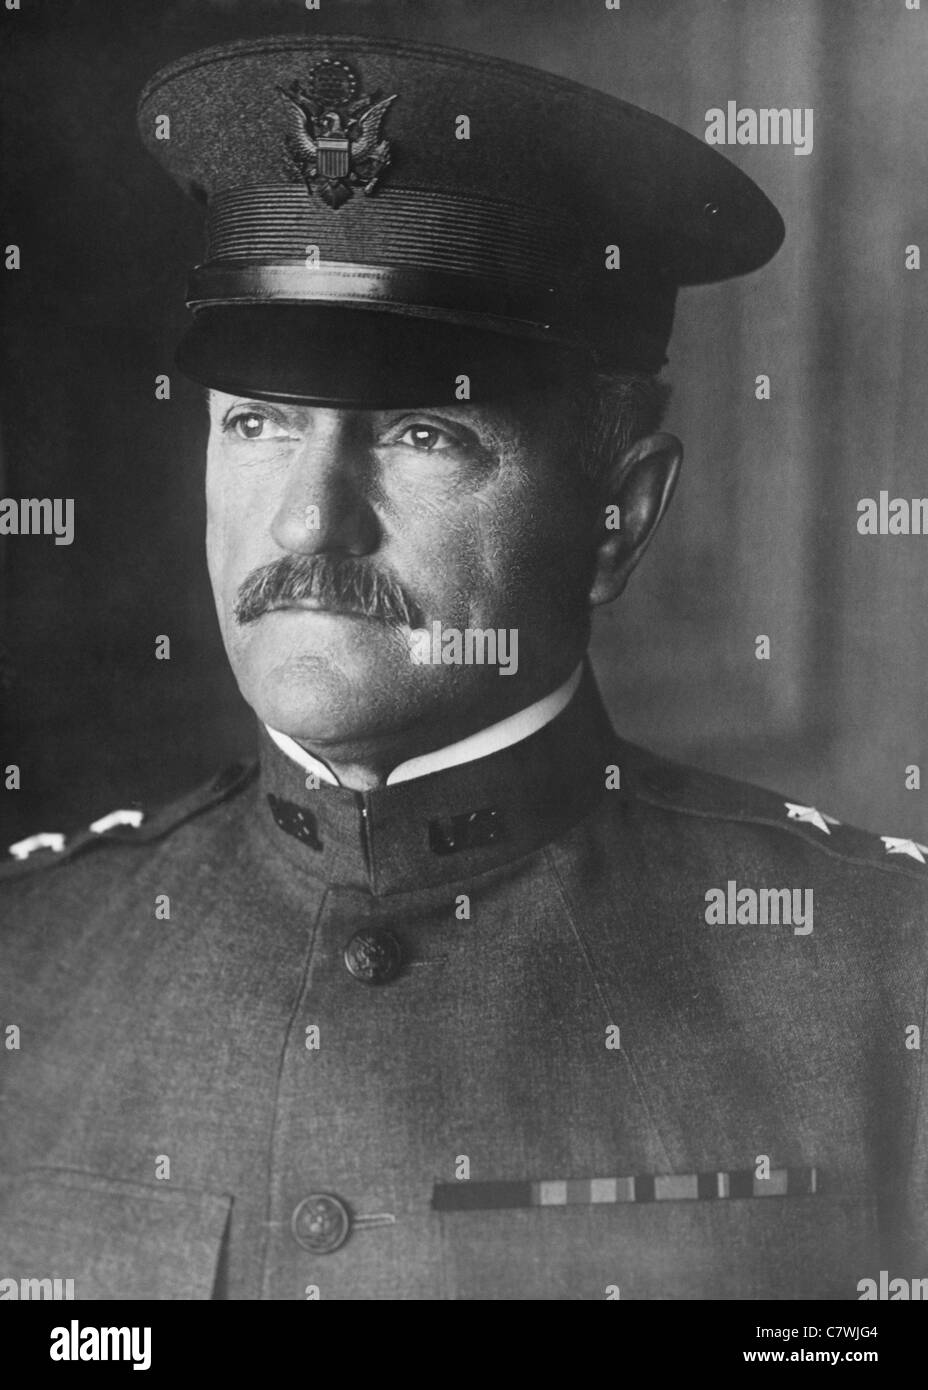 Vintage portrait photo of US Army General John J. Pershing (1860 - 1948). Stock Photo